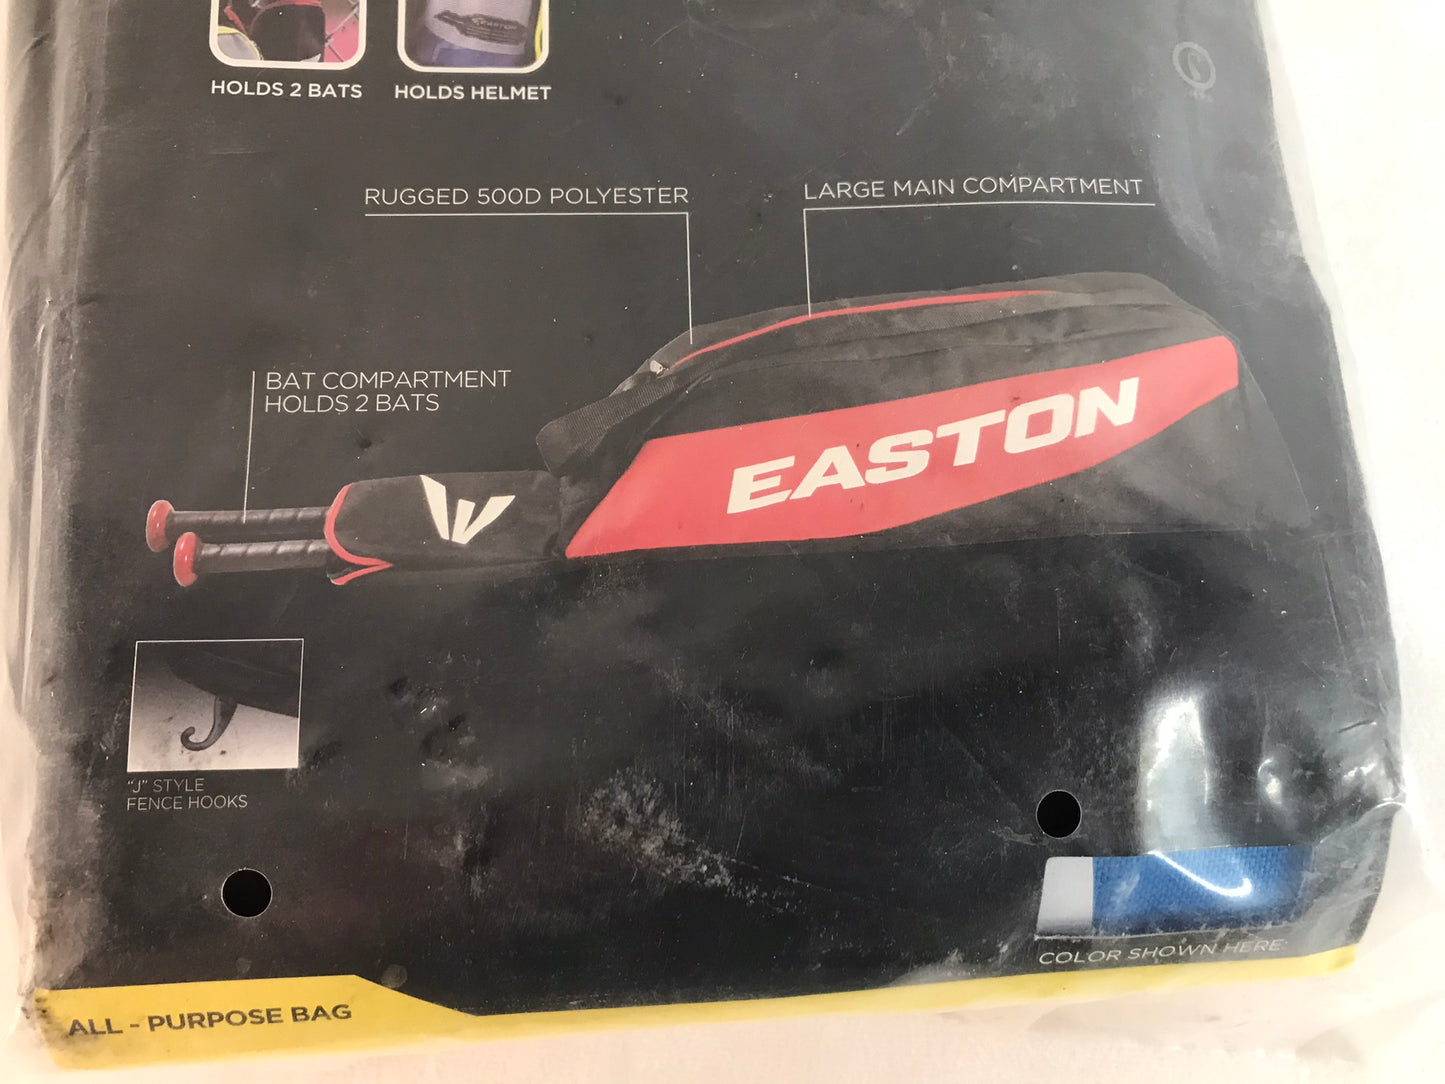 Baseball Bag Adult Size Easton Bag Speed Brigade Holds 2 Bats and Helmet NEW SEALED IN BAG Blue Black